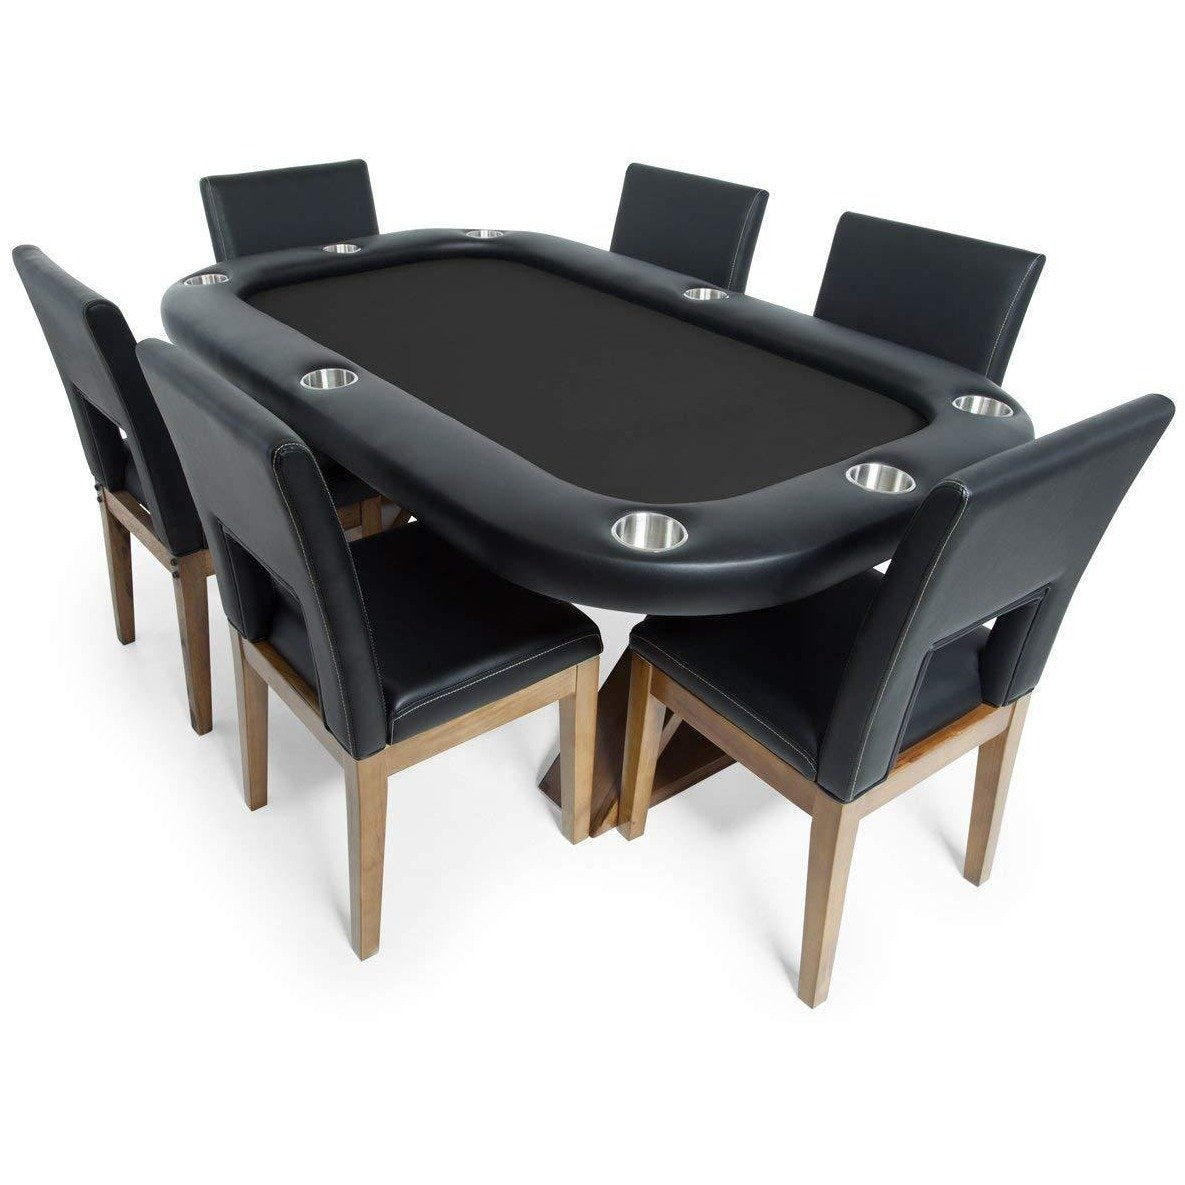 BBO Poker Tables Helmsley Poker Dining Chair Set - Just Poker Tables